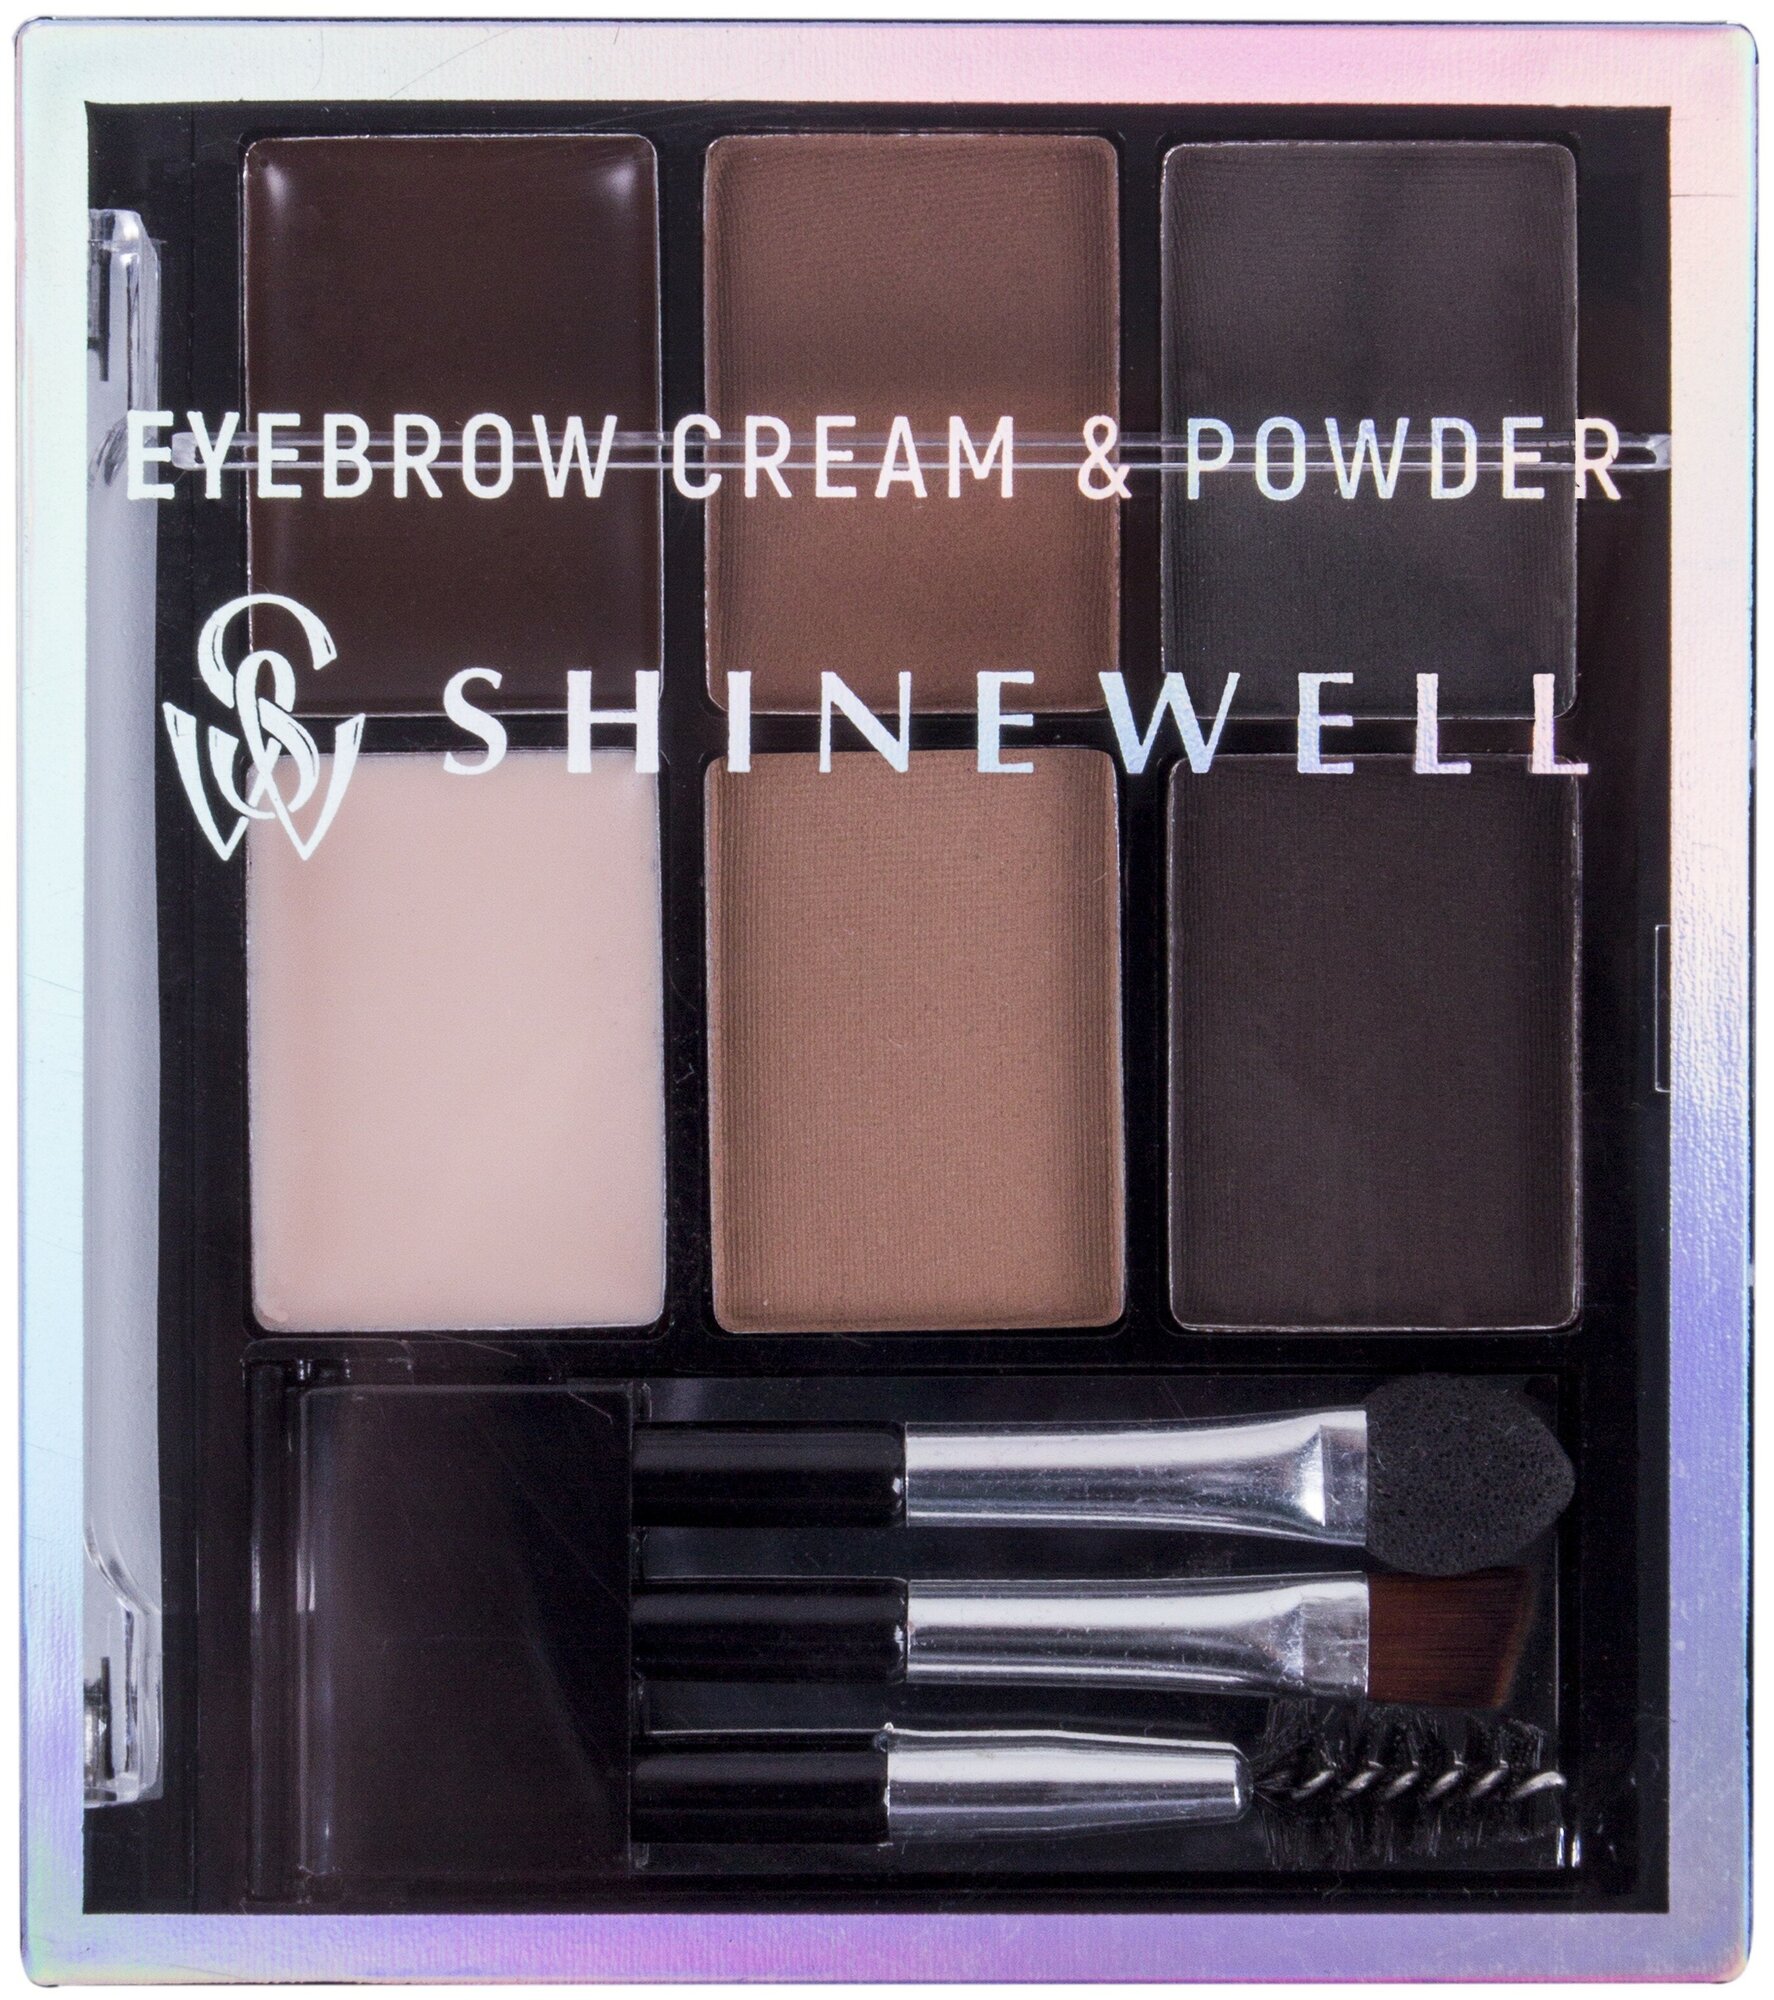      Shinewell Eyebrow Cream & Powder BC1-3/1 1 